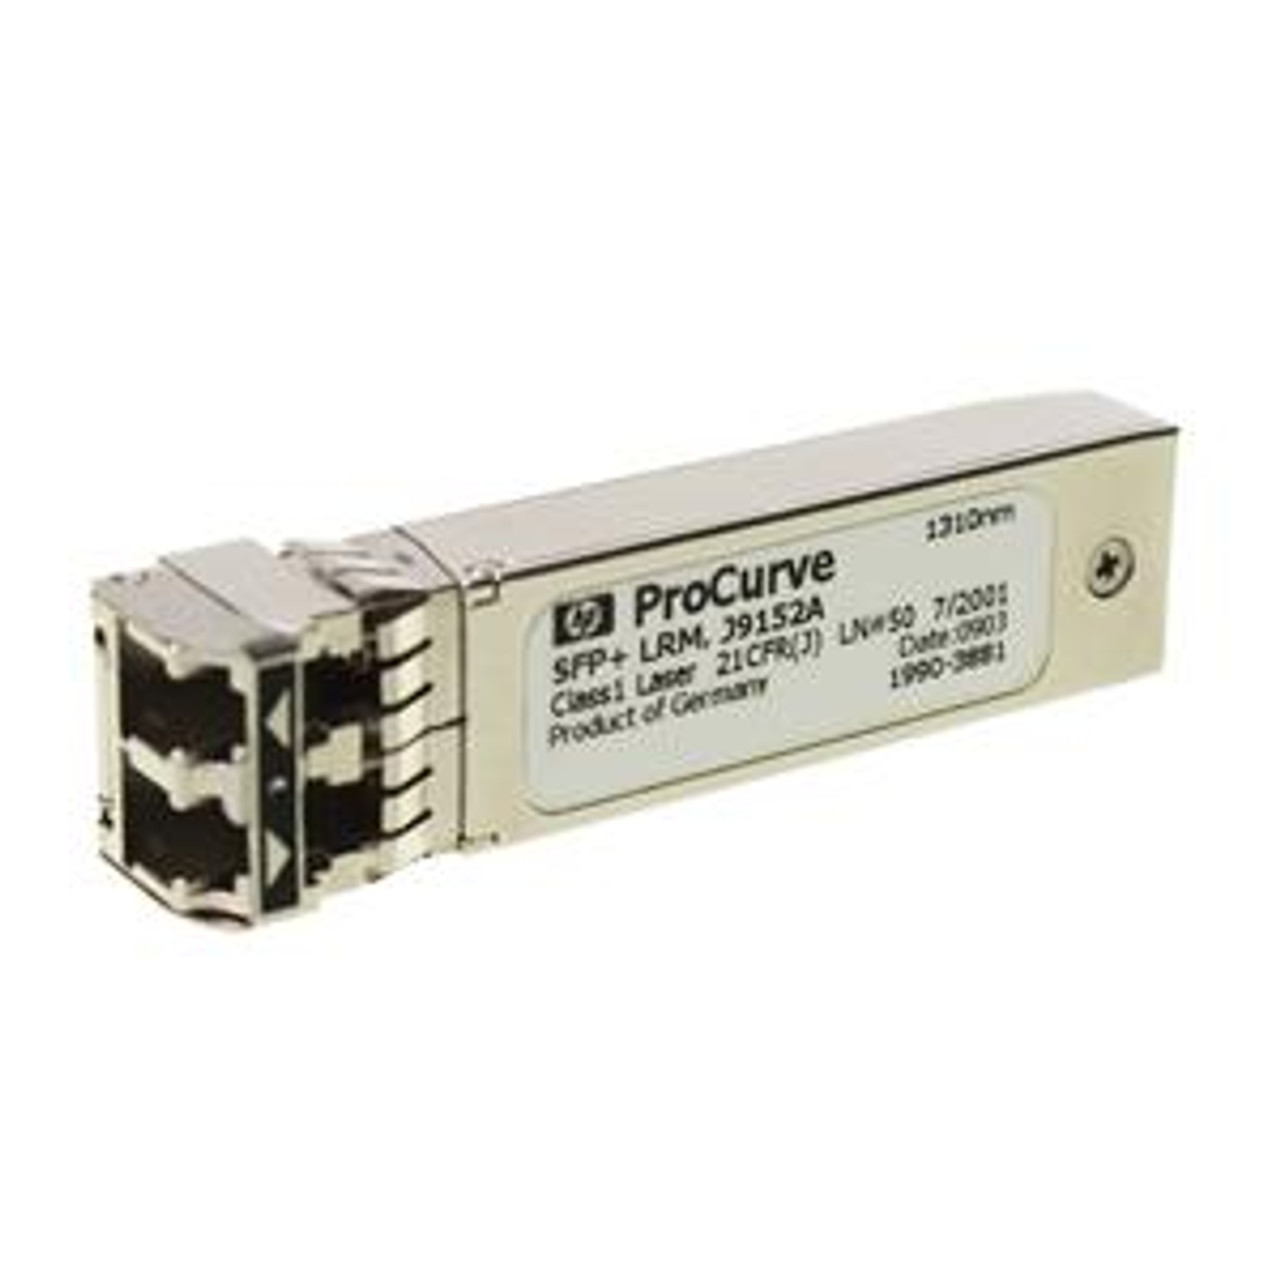 J9152-69001 - HP ProCurve 10-GBe SFP (mini-GBIC) LRM LC Multi-Mode 850nm Transceiver Linear